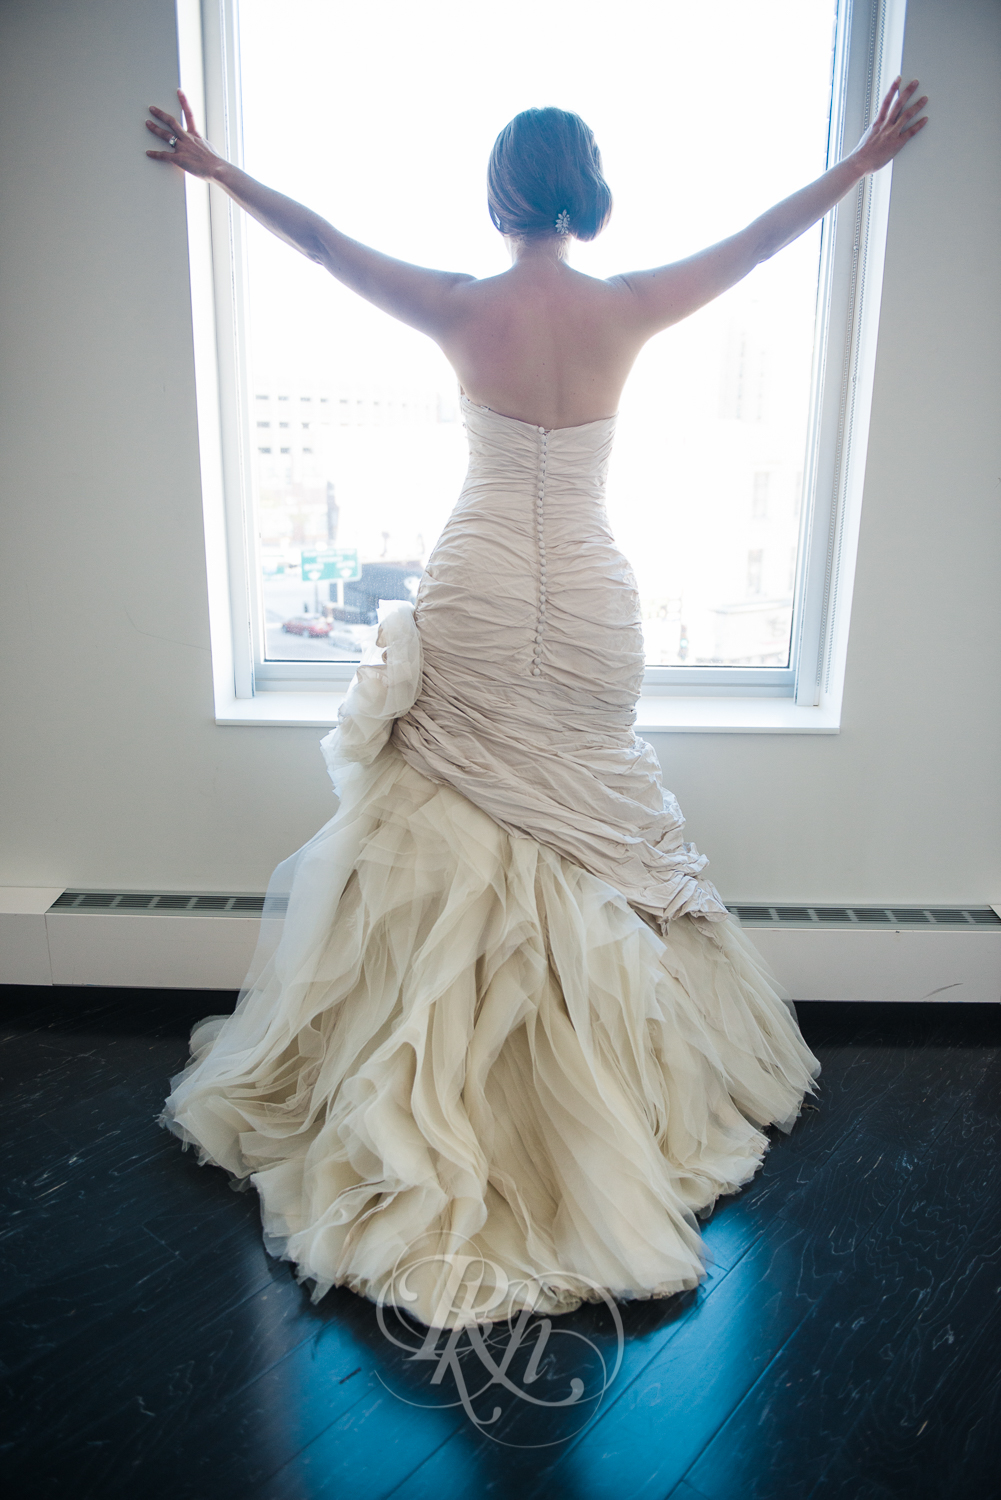  Minneapolis Wedding Photography - Becca & Justin - RKH Images-28 